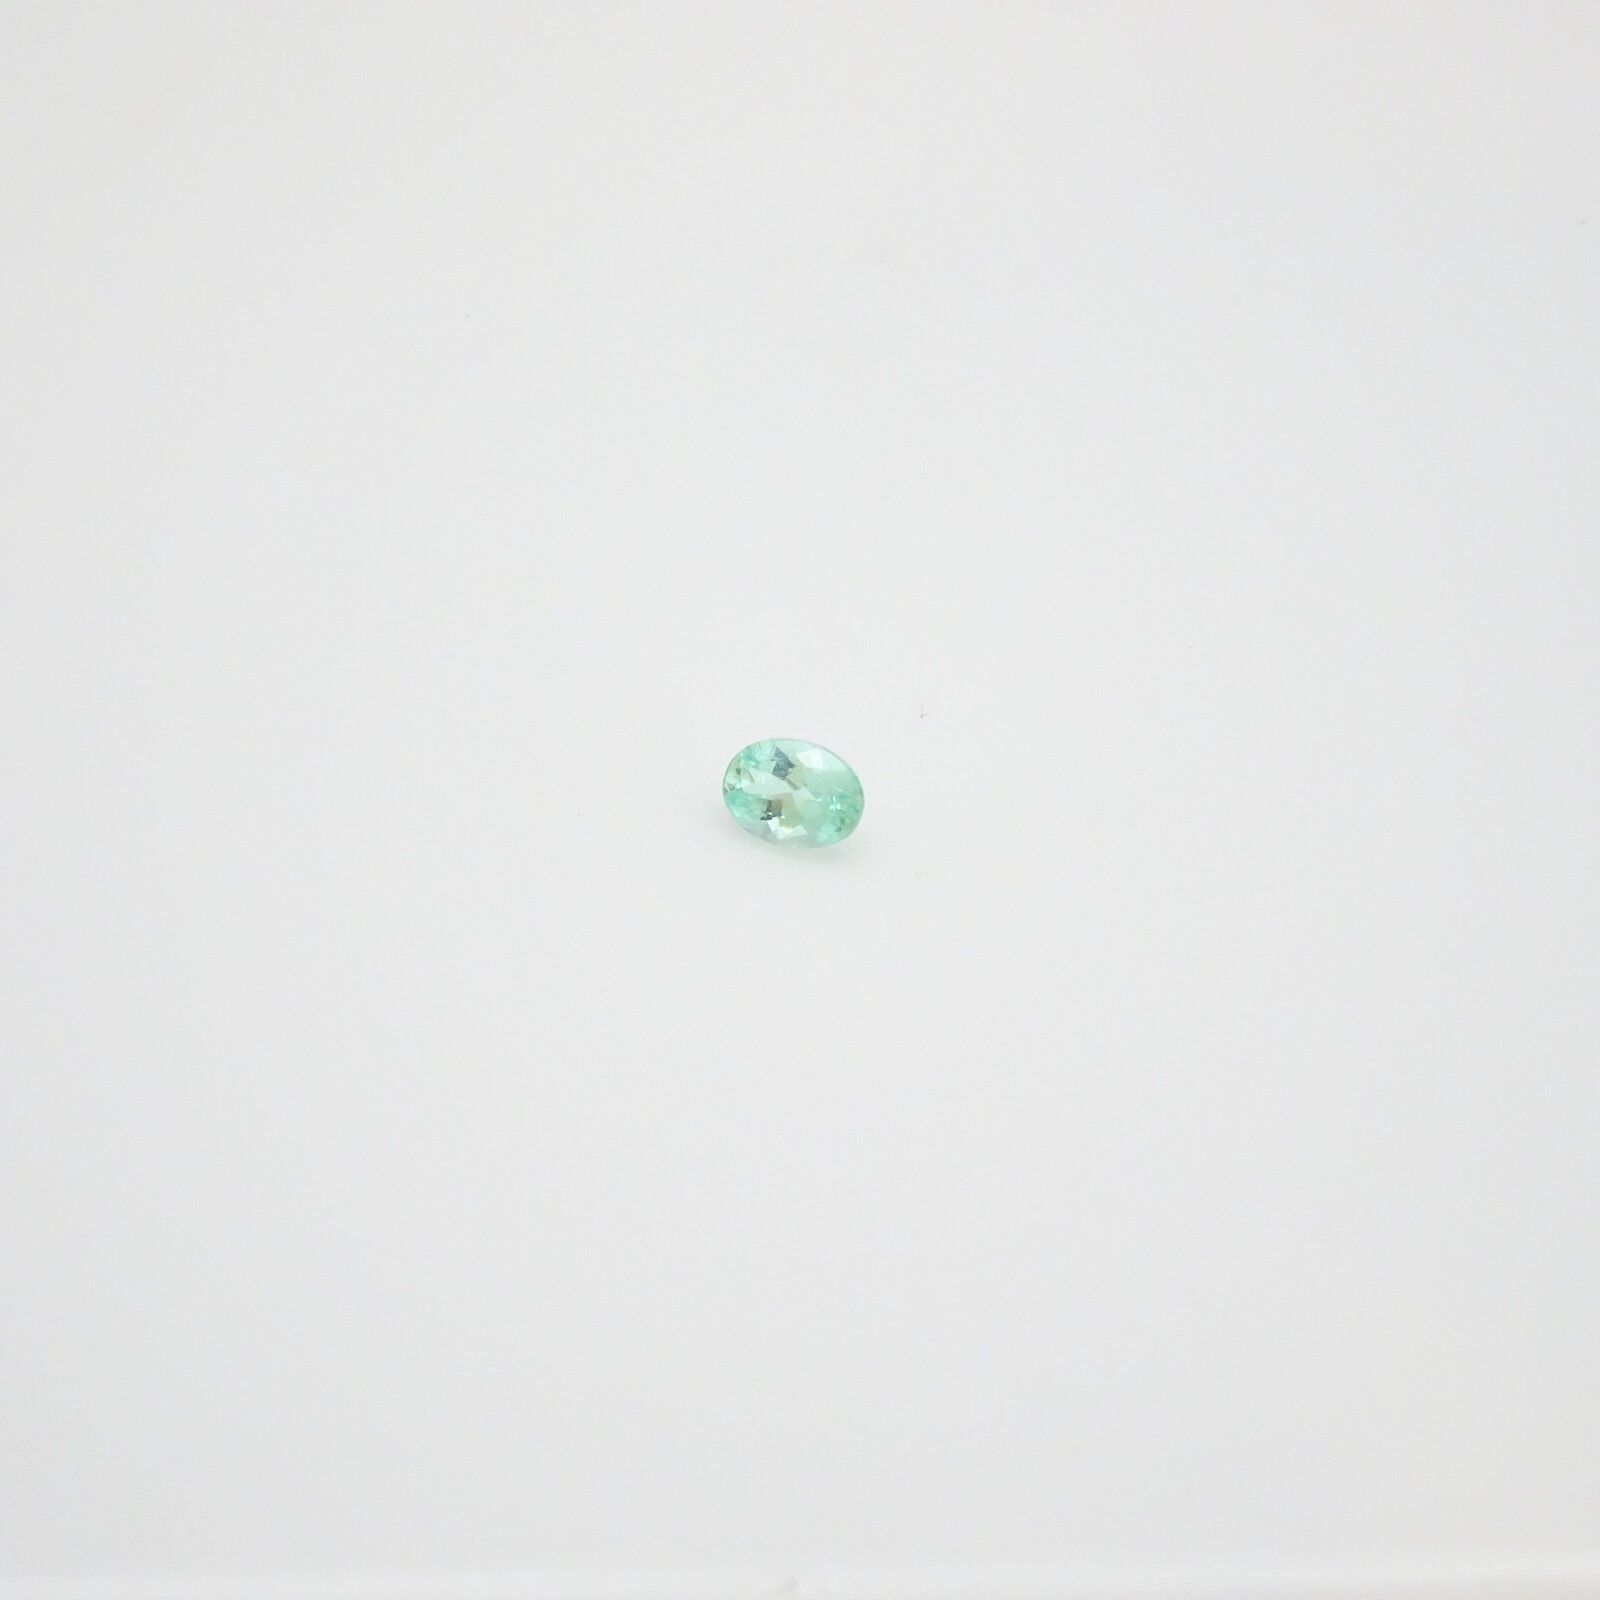 Paraiba - Copper Bearing - Tourmaline - 0.80ct Oval cut - 7x5mm - Loose Gemstone Paraiba - фотография #5